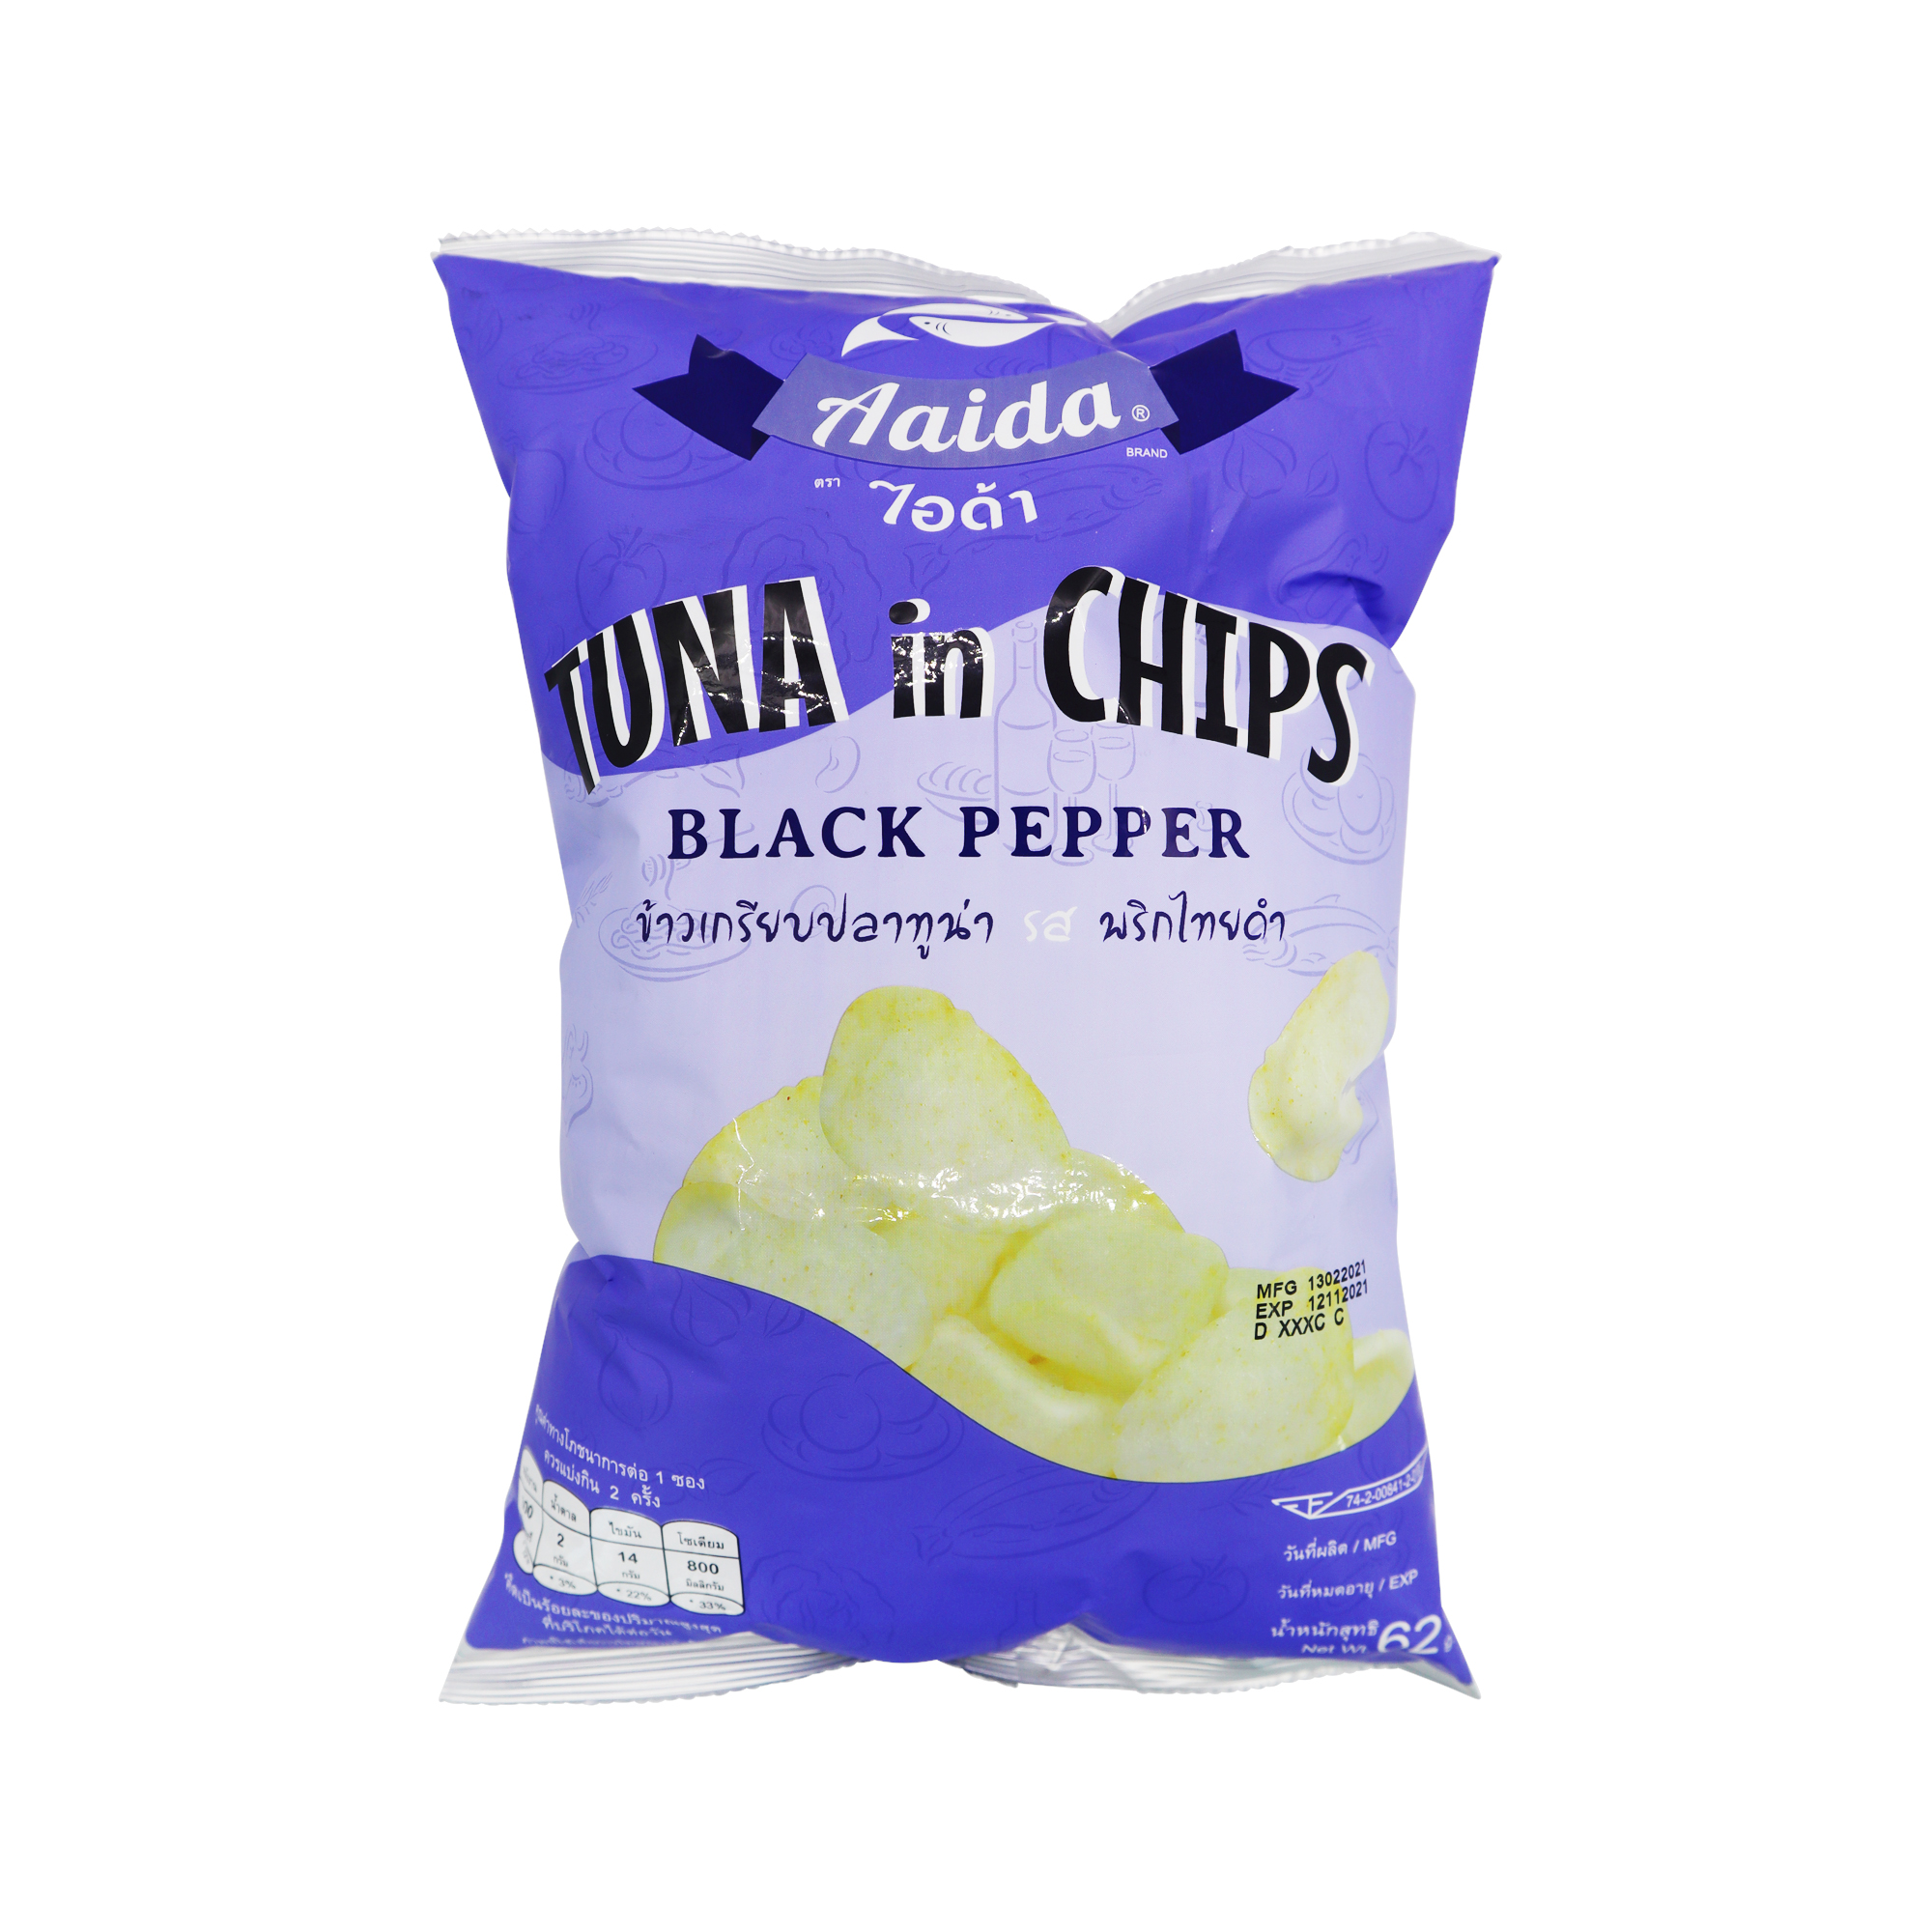 Aaida Tuna Chips Black Pepper Flavour 62g